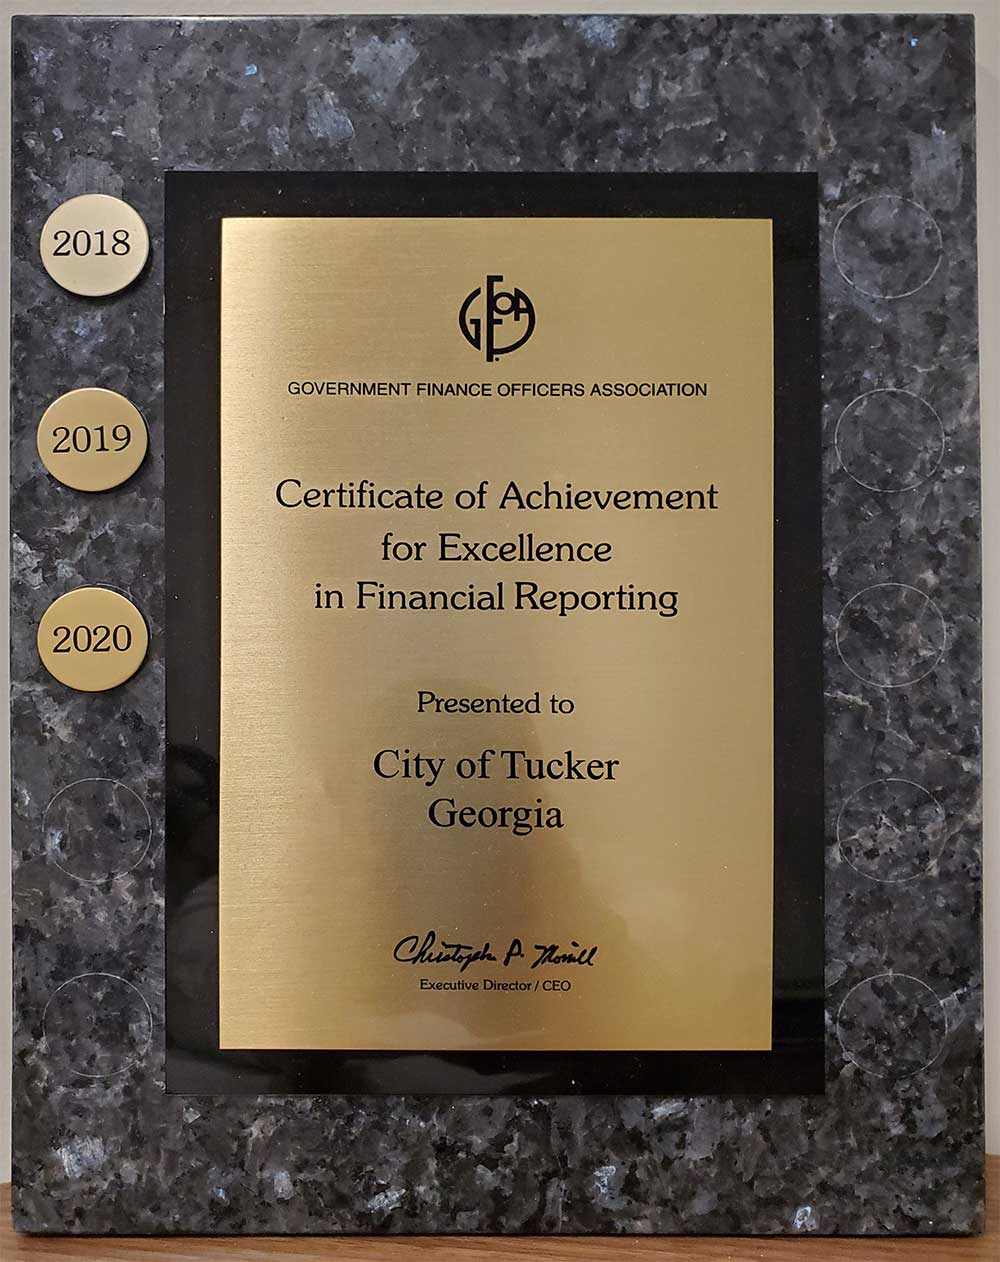 Award plaque presented to Tucker Finance Department